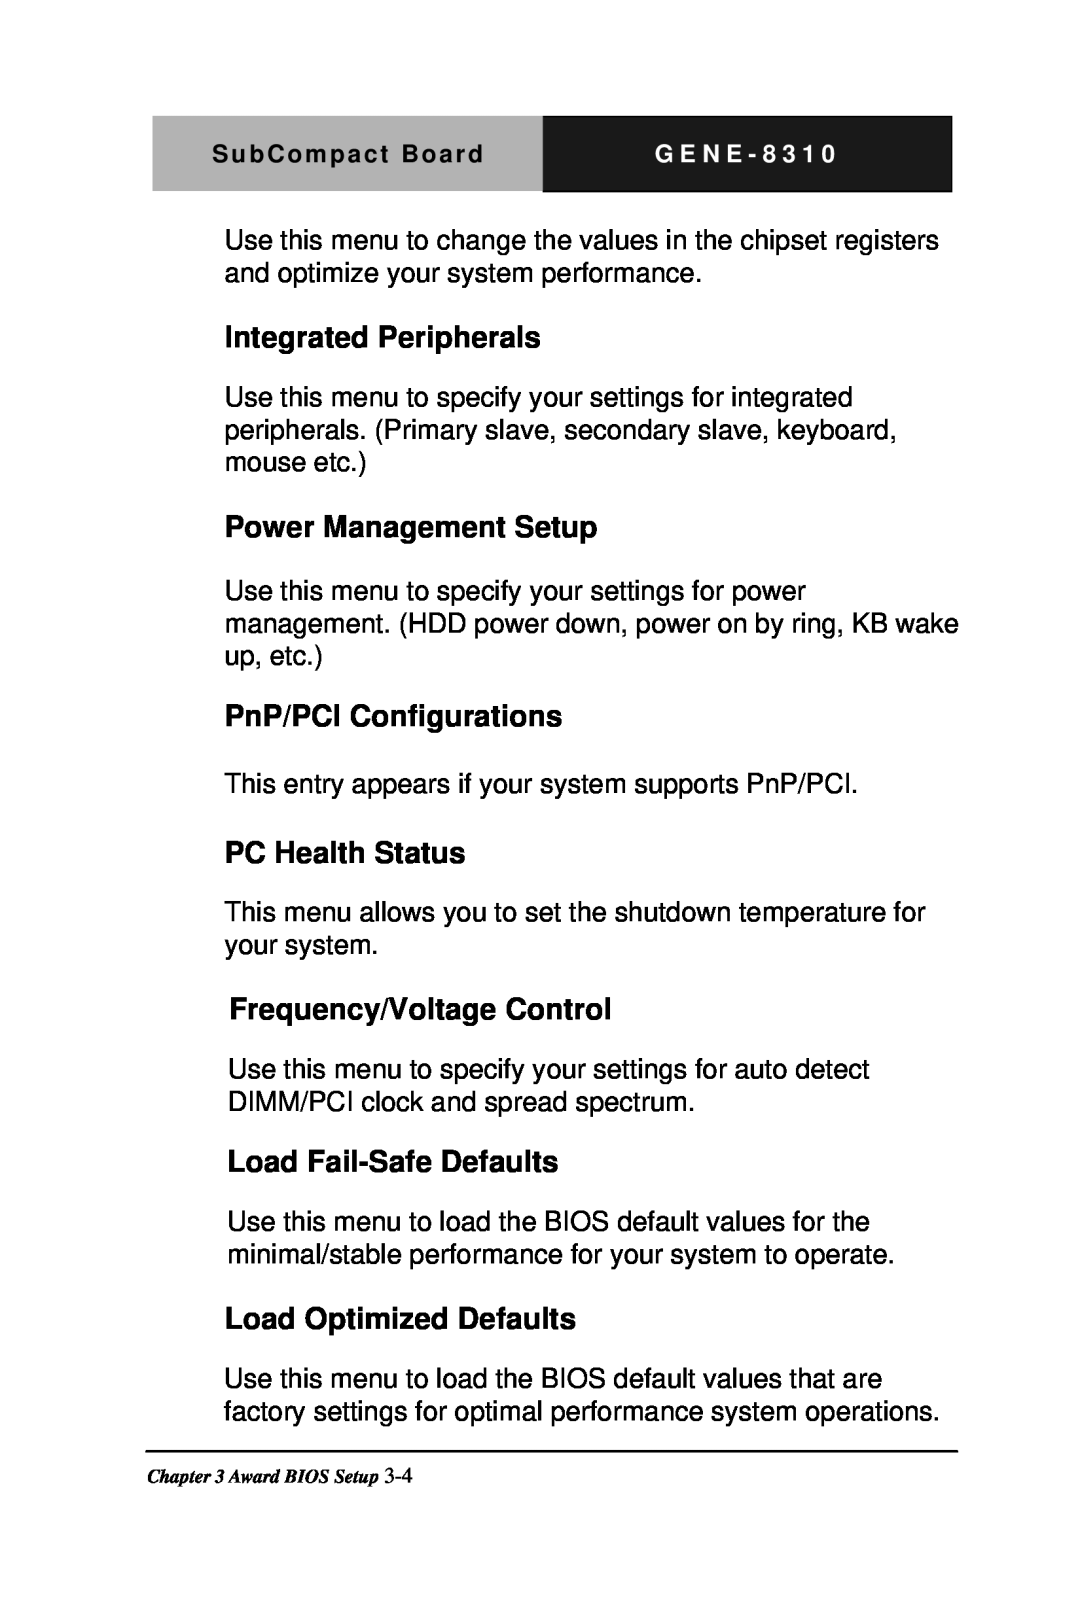 Intel GENE-8310 manual Integrated Peripherals, Power Management Setup, PnP/PCI Configurations, PC Health Status 